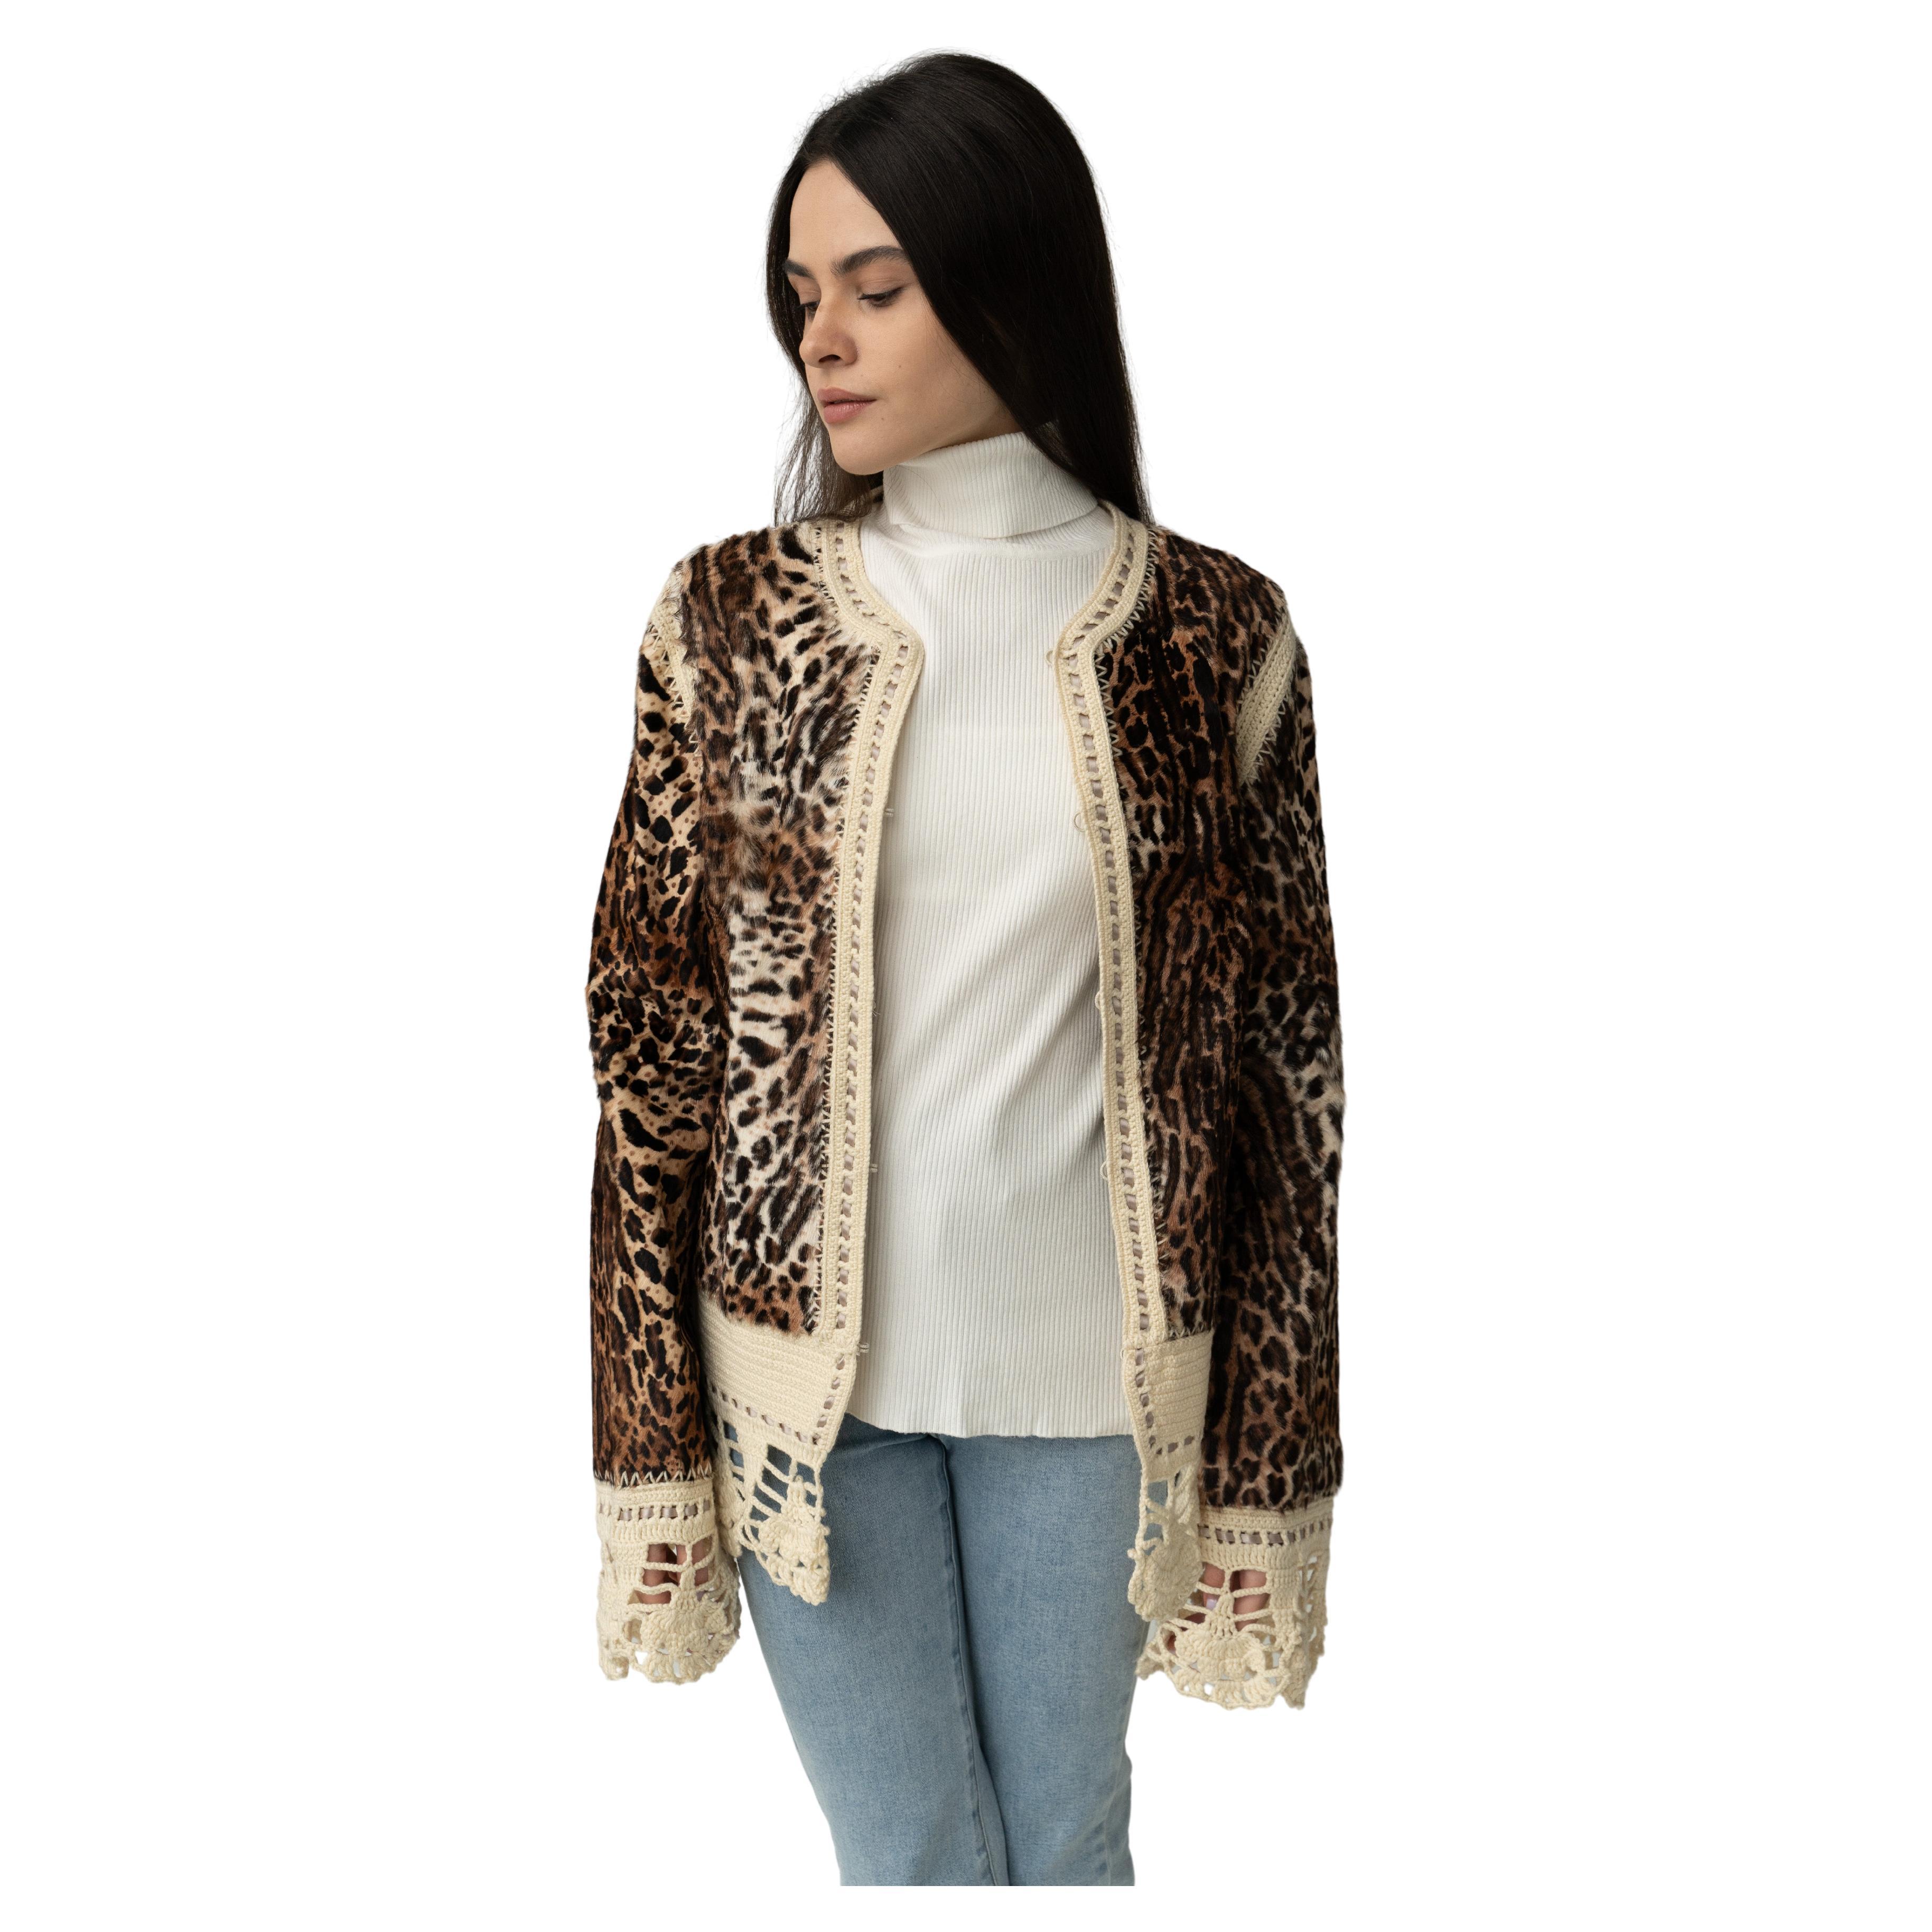 John Galliano for Christian Dior jacket 2005 IT 42 FR 38 Mizza Bricard leopard  For Sale